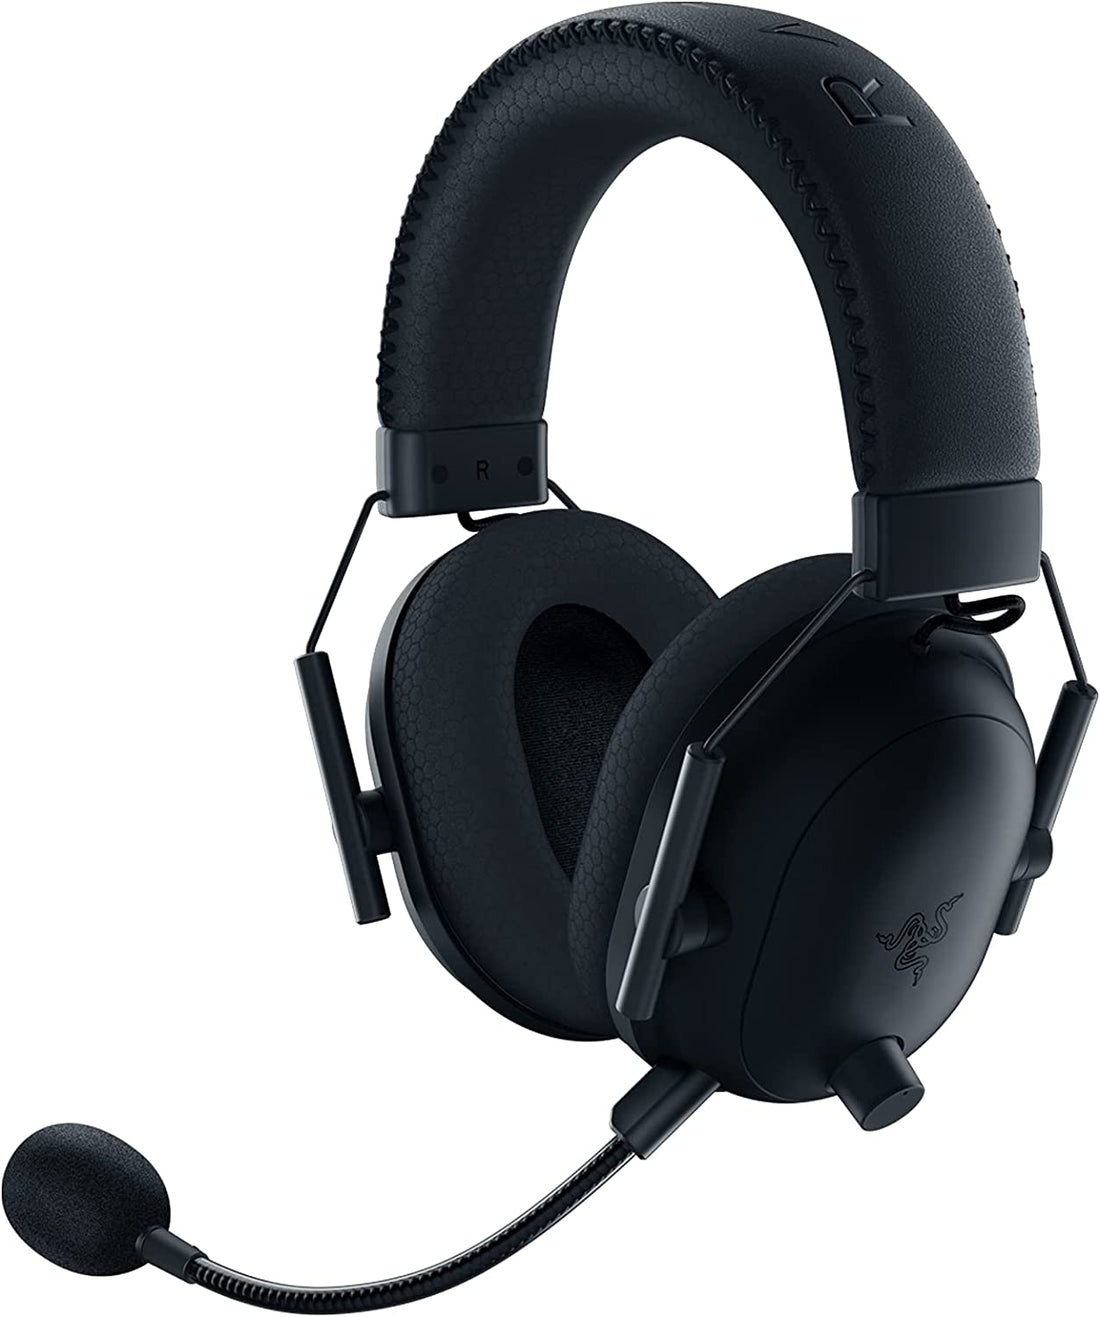 Razer BlackShark V2 Pro Wireless THX Spatial Audio Gaming Headset - Black (Certified Refurbished)